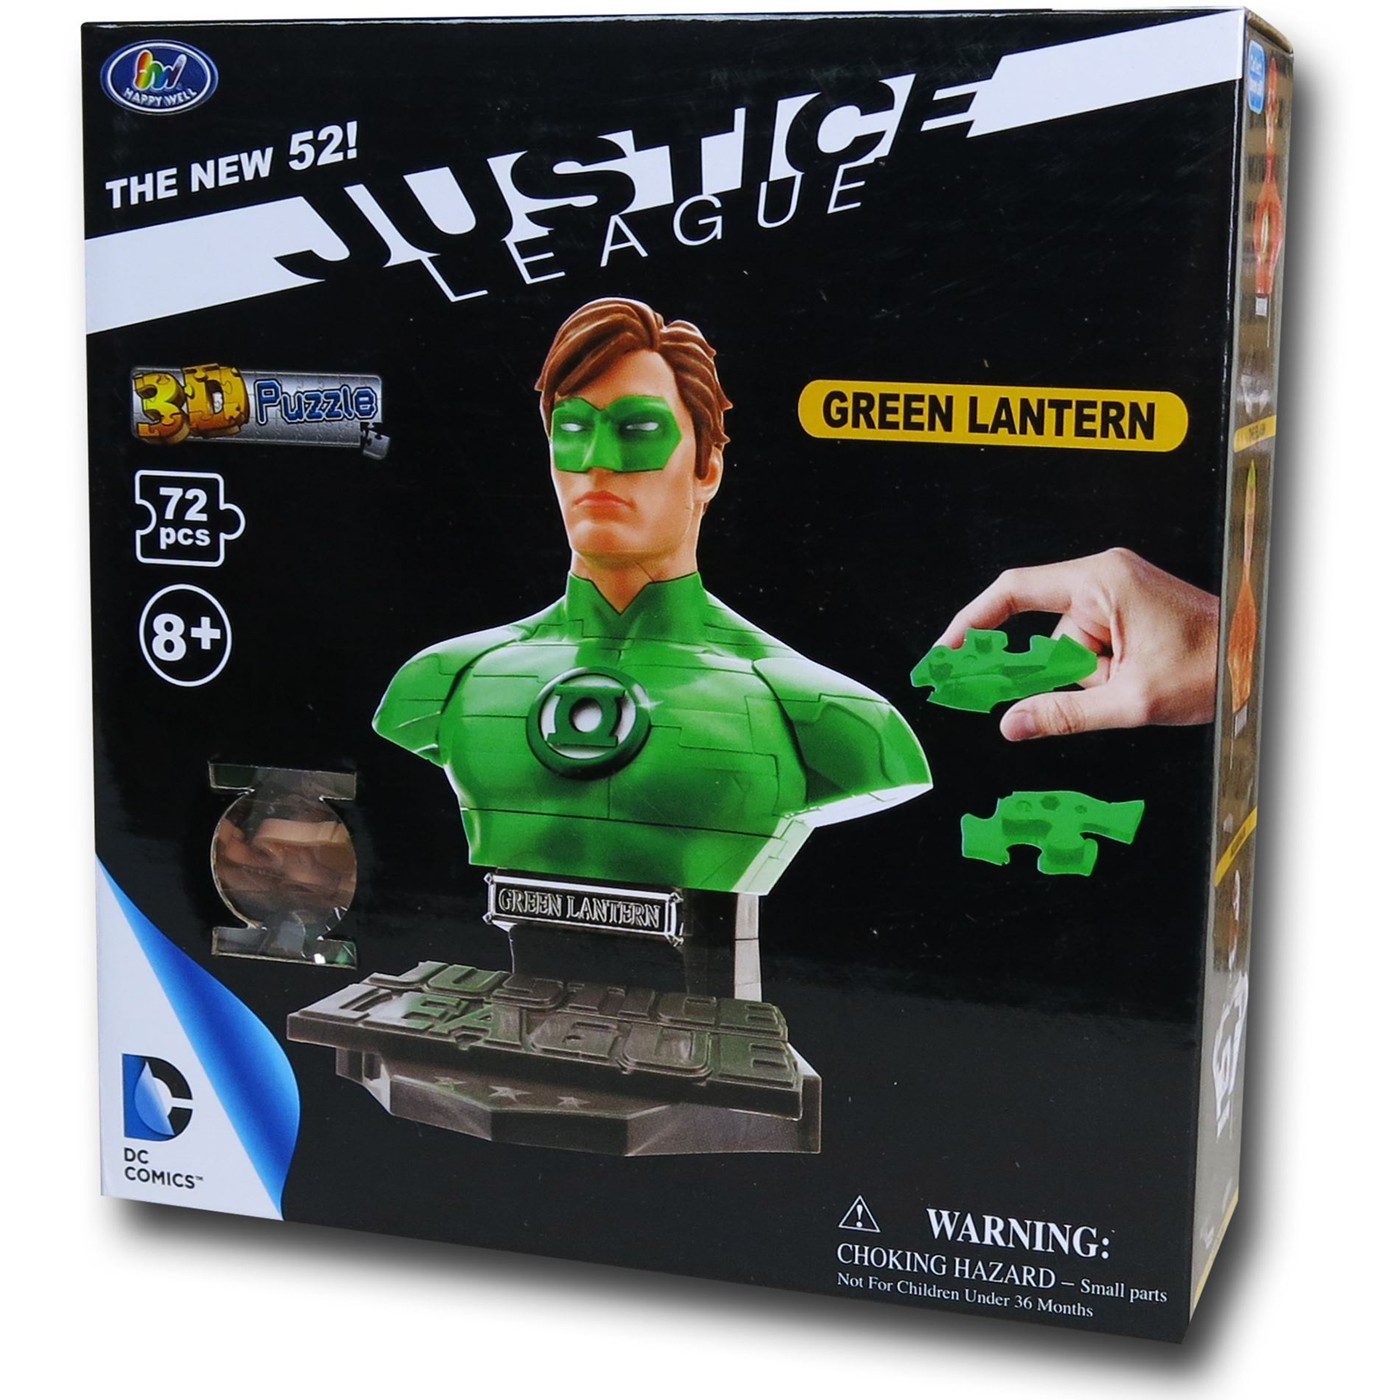 Green Lantern 3D Puzzle